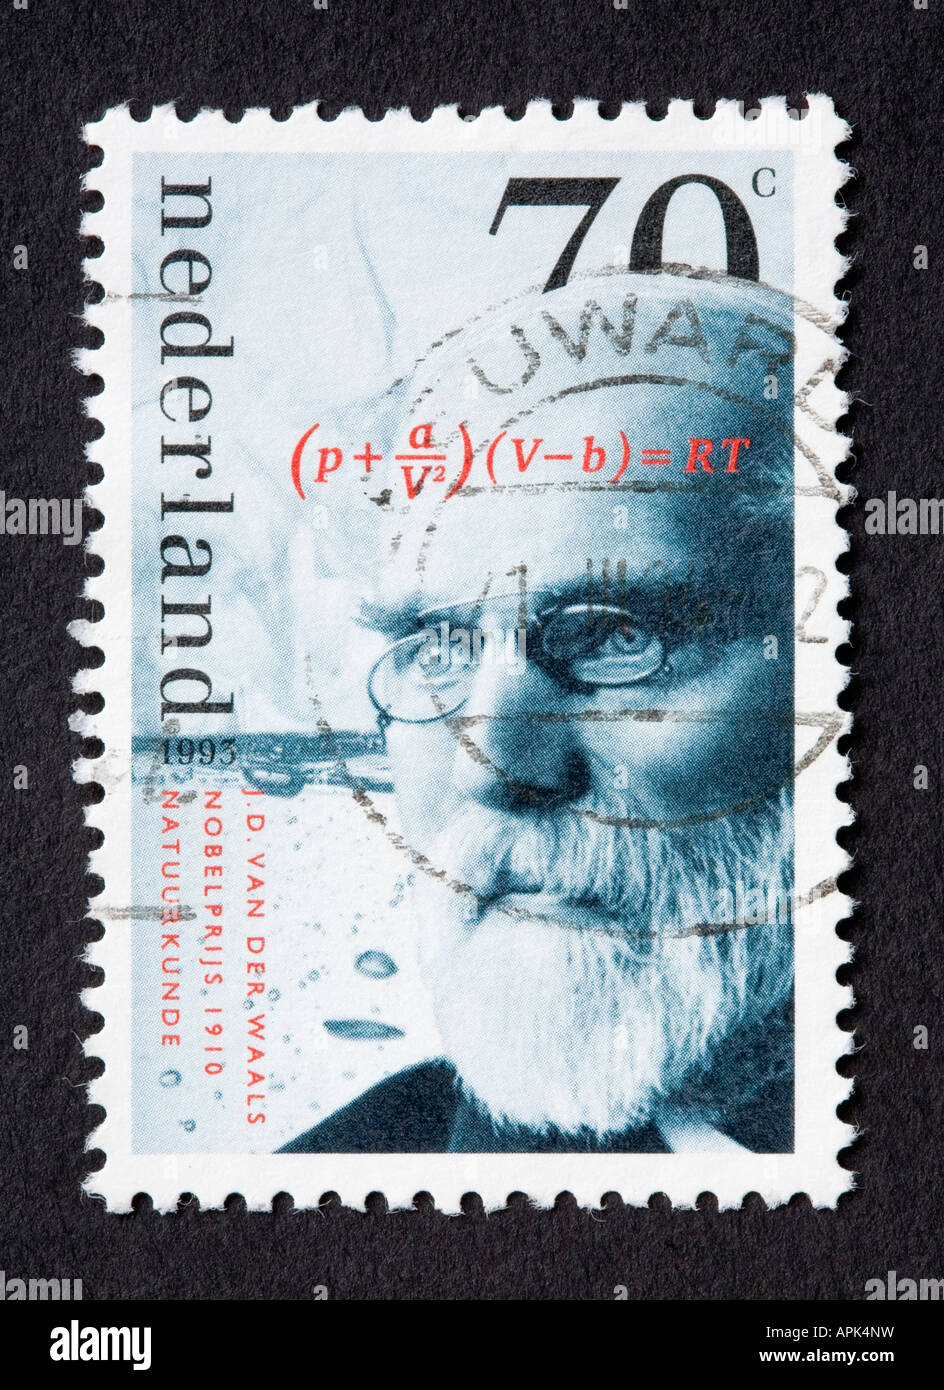 Dutch postage stamp Stock Photo